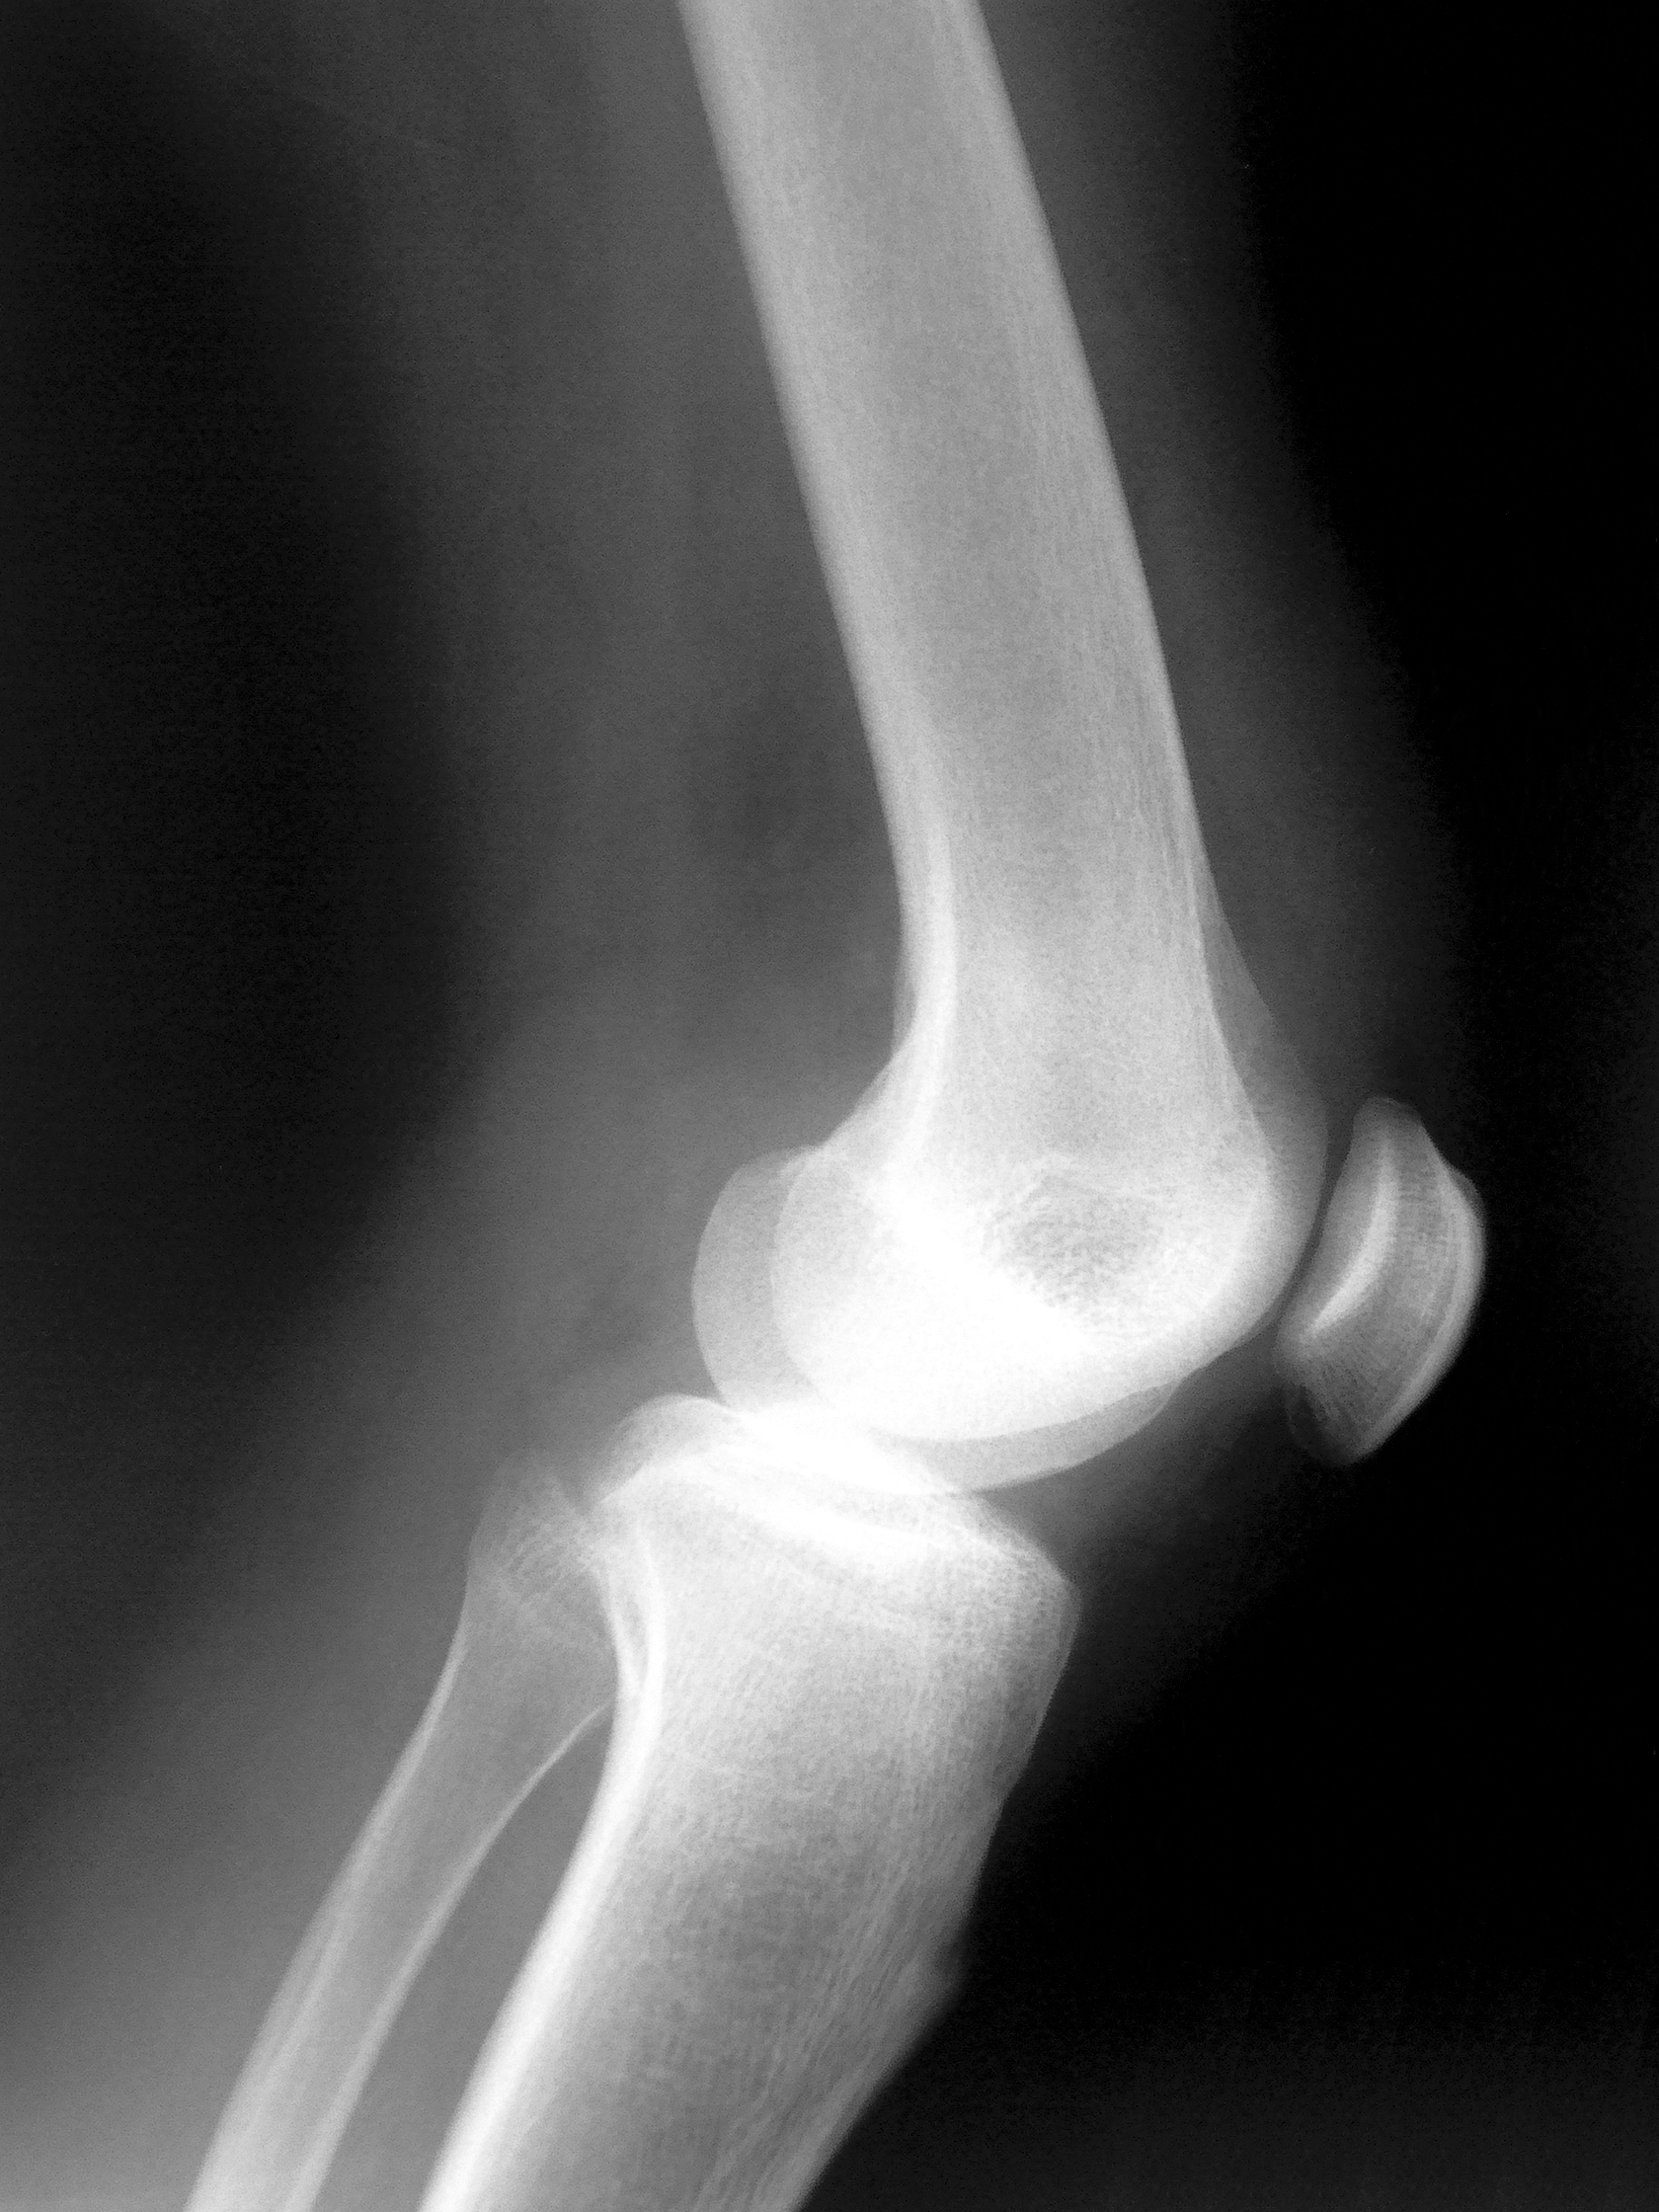 Рентген колена. Knee XRAY. Рентген коленного сустава сбоку. Рентген коленного сустава здорового человека. Здоровое колено рентген сбоку.